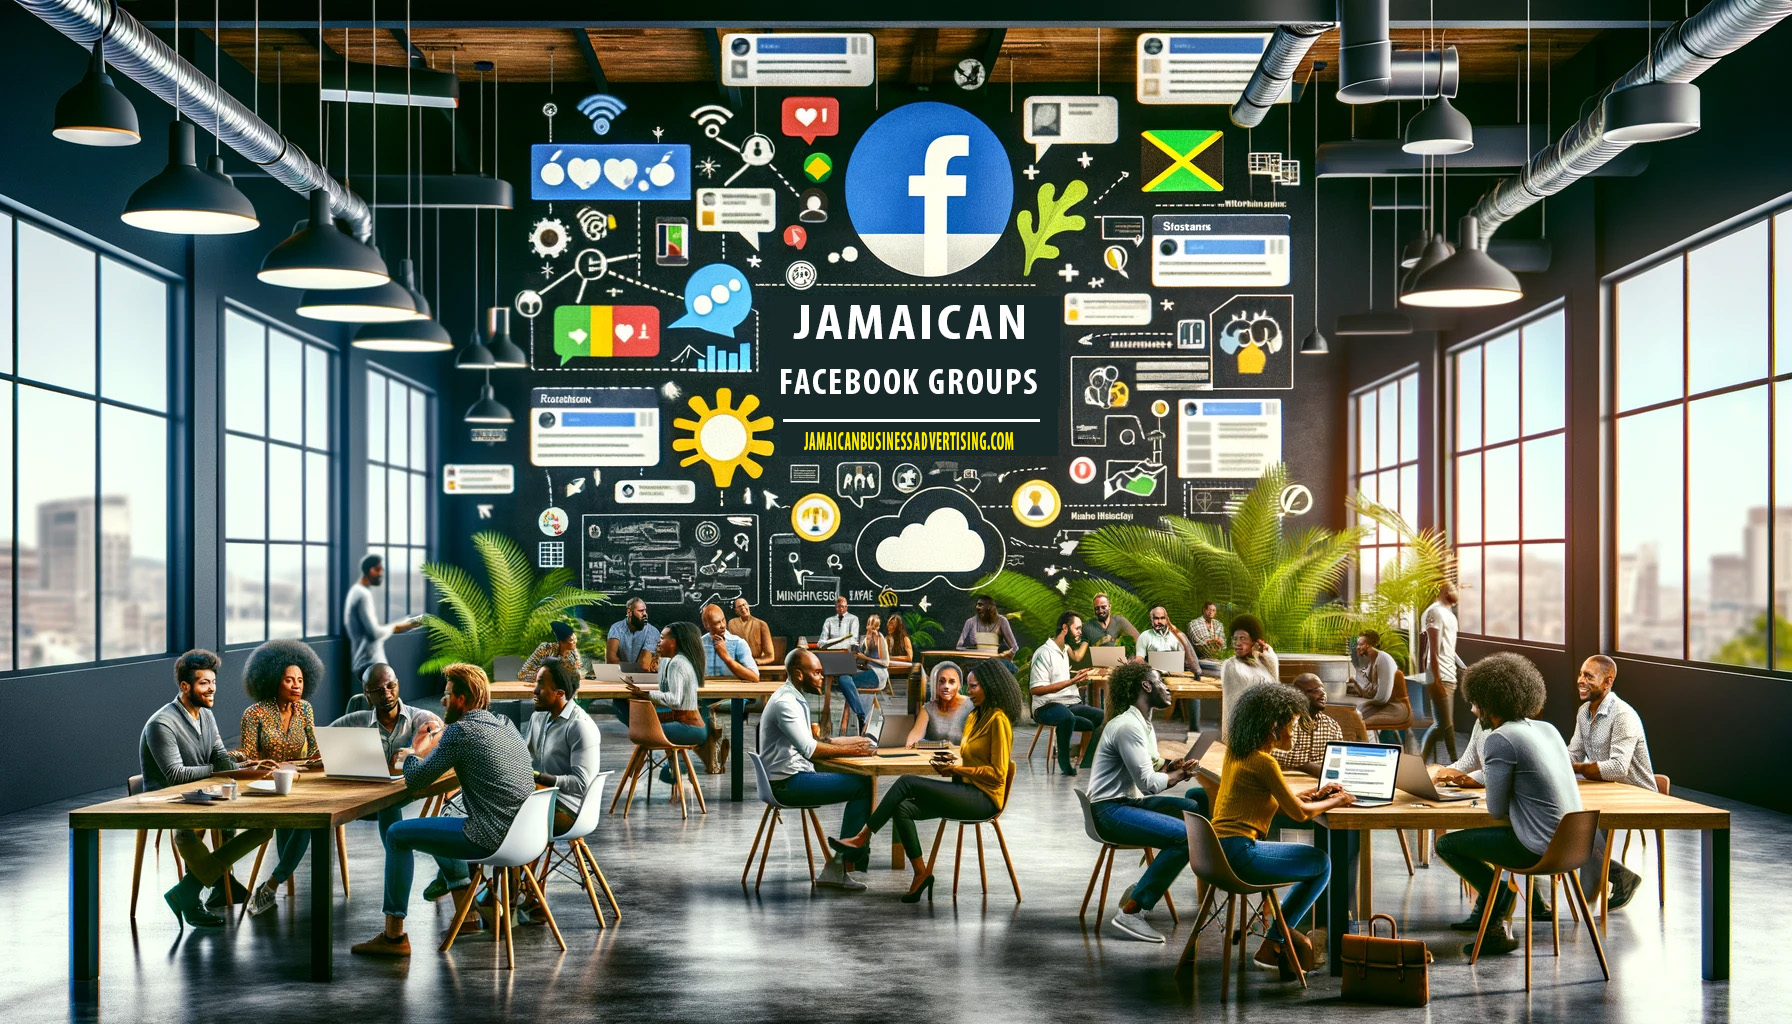 Jamaican Facebook Groups - JamaicanBusinessAdvertising.com